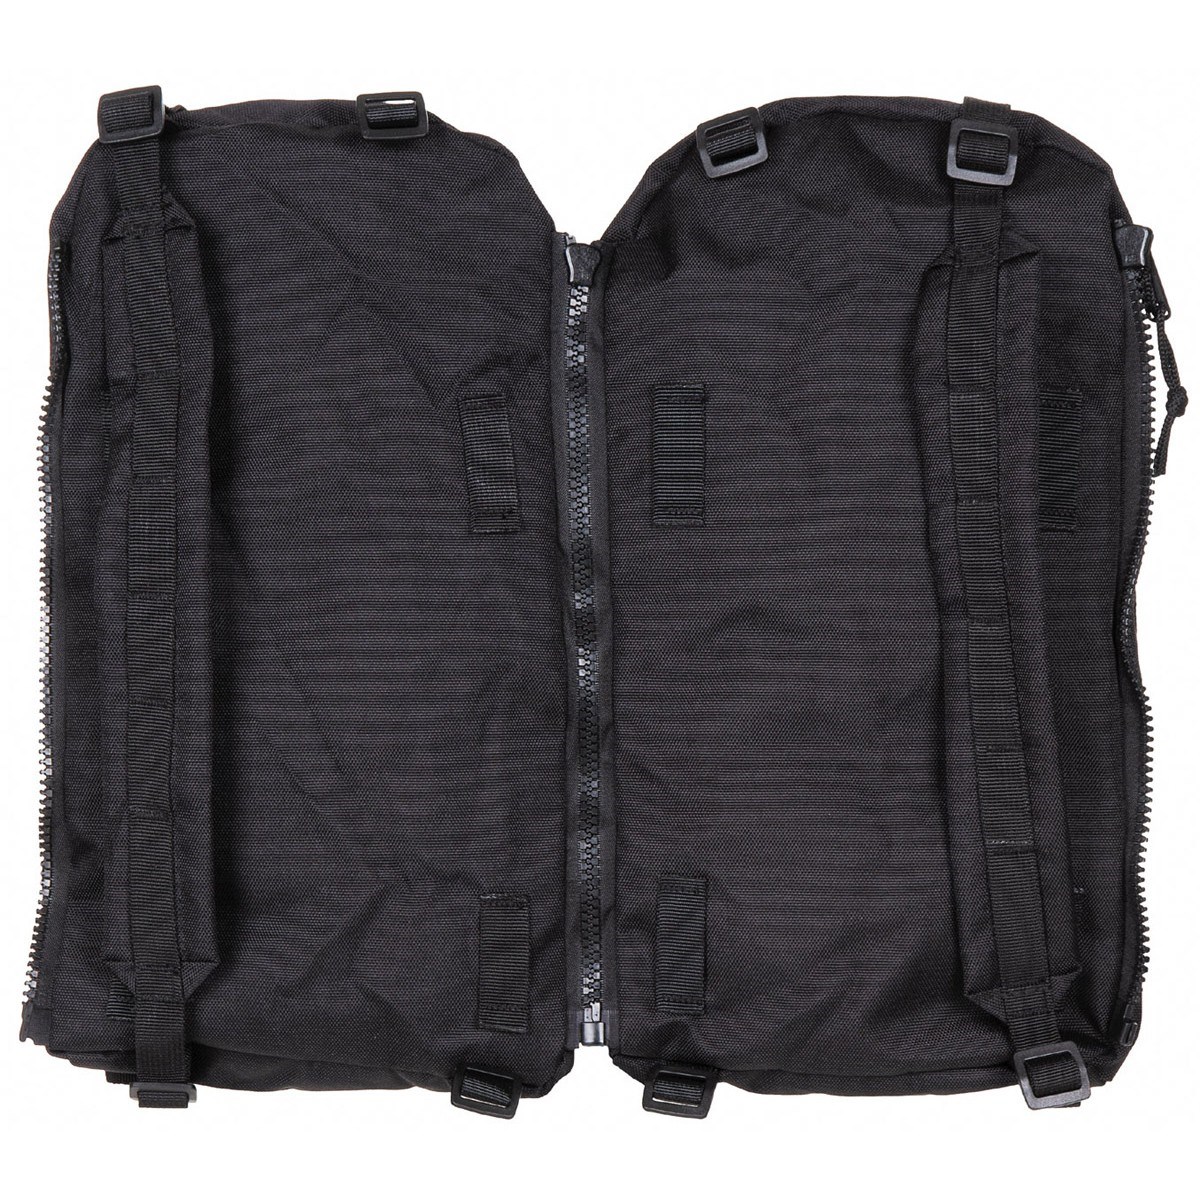 Alpin MM Backpack Black, Tan – Second Edit